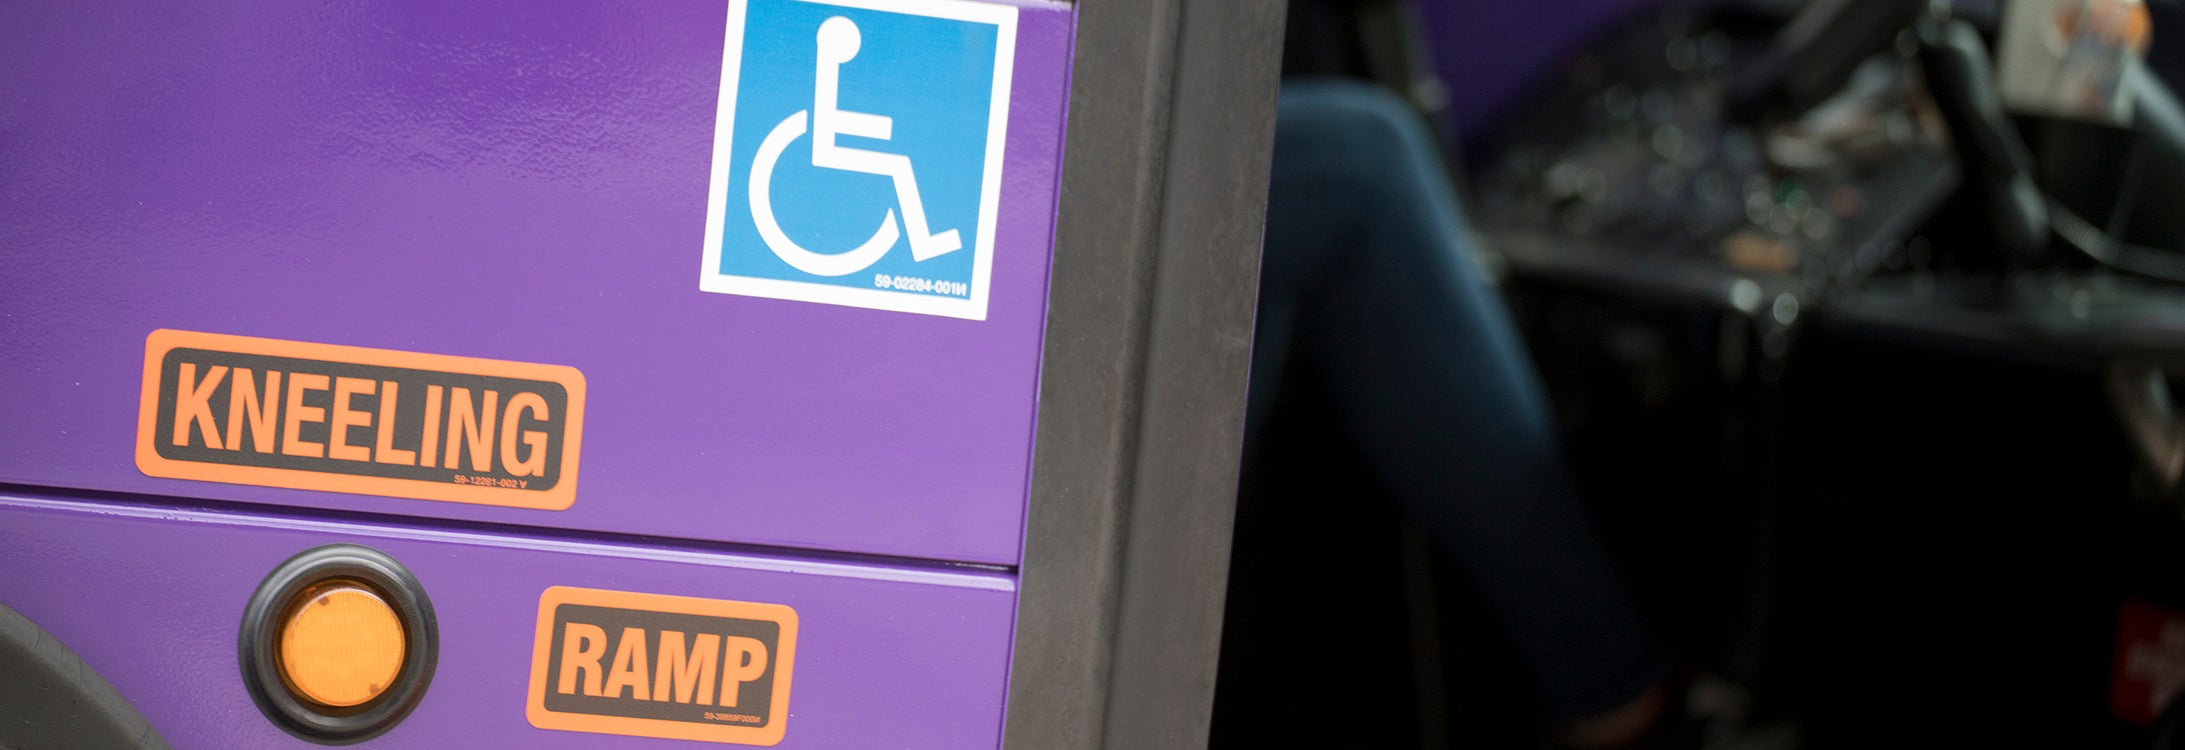 Wheelchair lift on bus